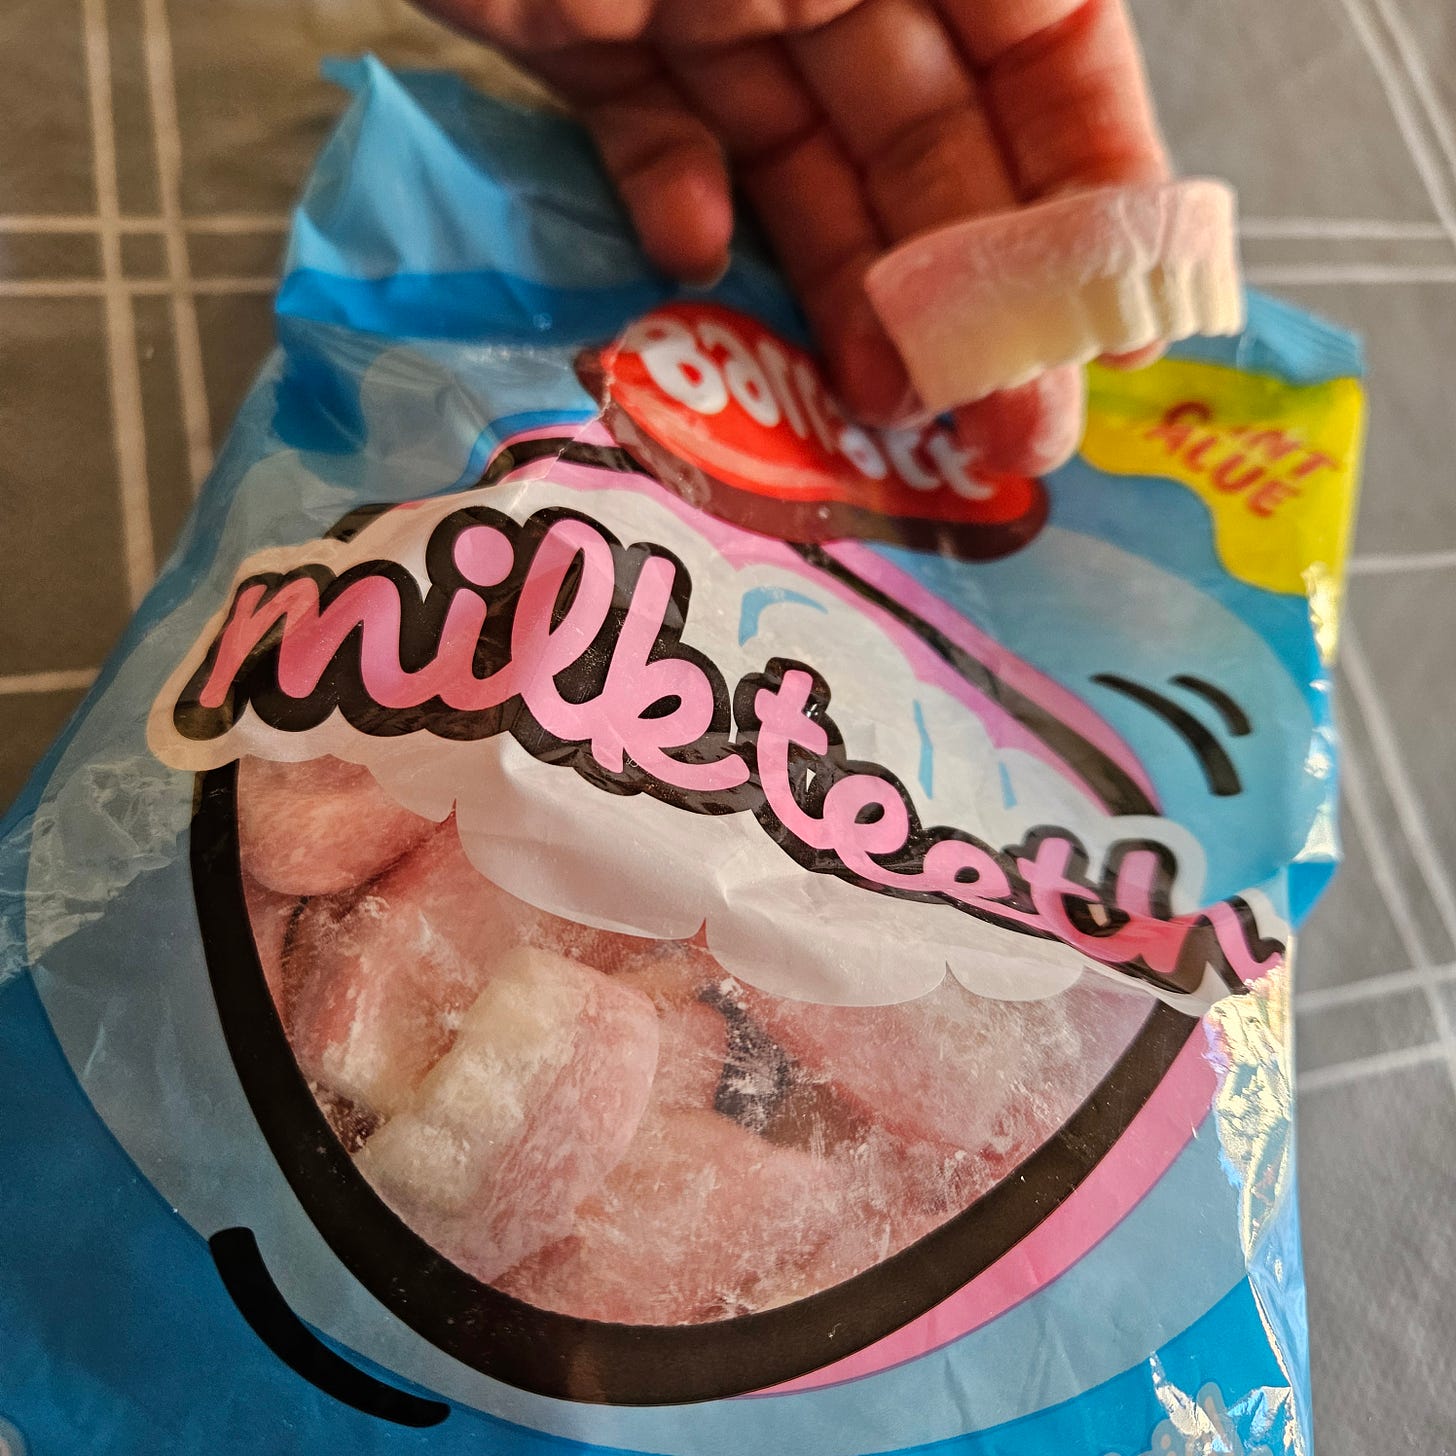 A bag of milk teeth sweets